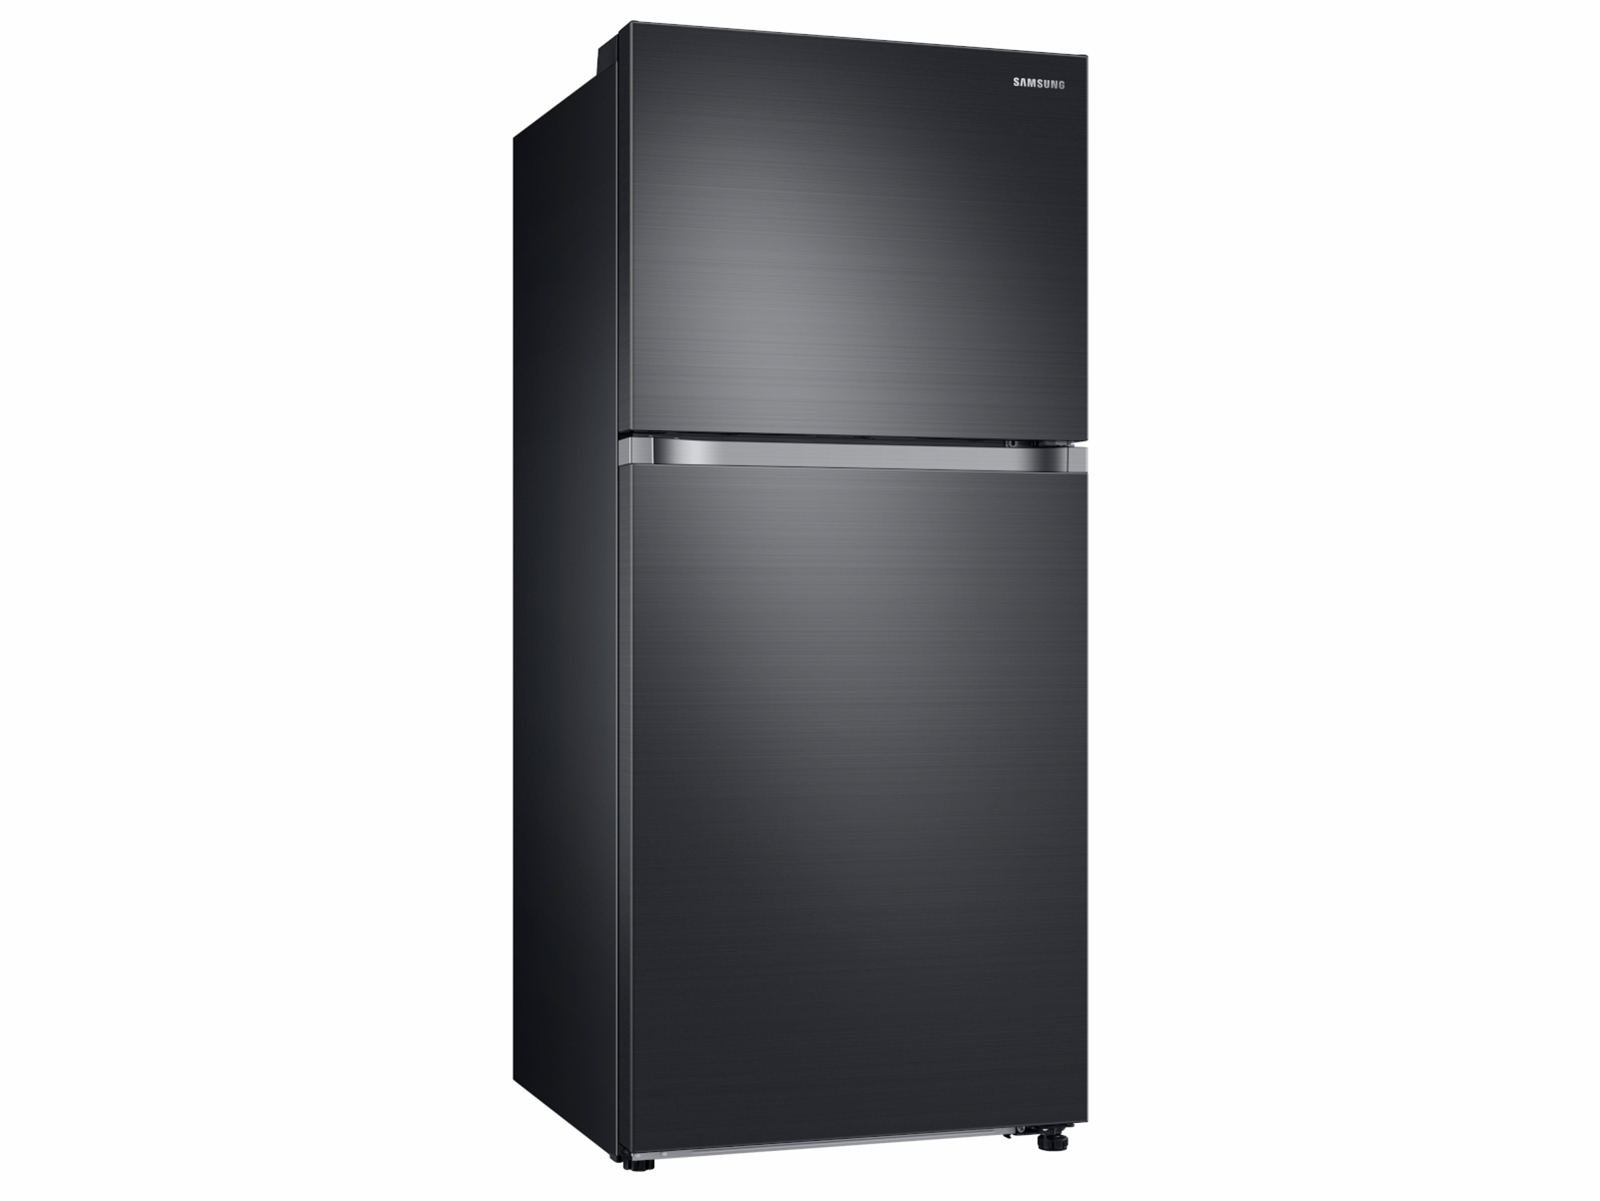 https://image-us.samsung.com/SamsungUS/home/home-appliances/refrigerators/top-mount/rt18m6215sg-aa/galleryv2/12_Refrigerator_Top_Freezer_RT18M6215SG_L-Perspective_Closed_Black20171025.jpg?$product-details-jpg$